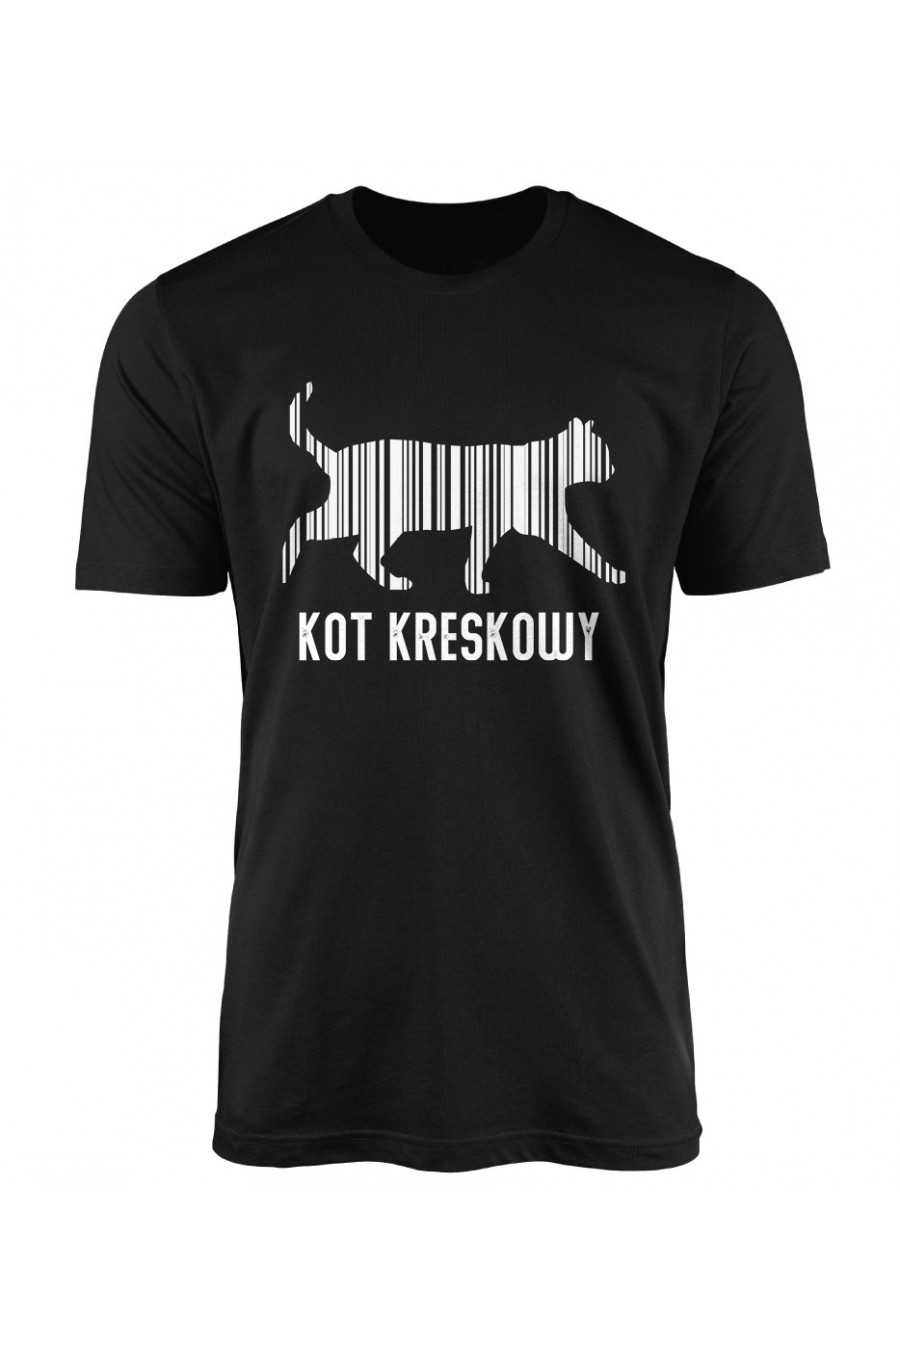 Koszulka Męska Kot Kreskowy